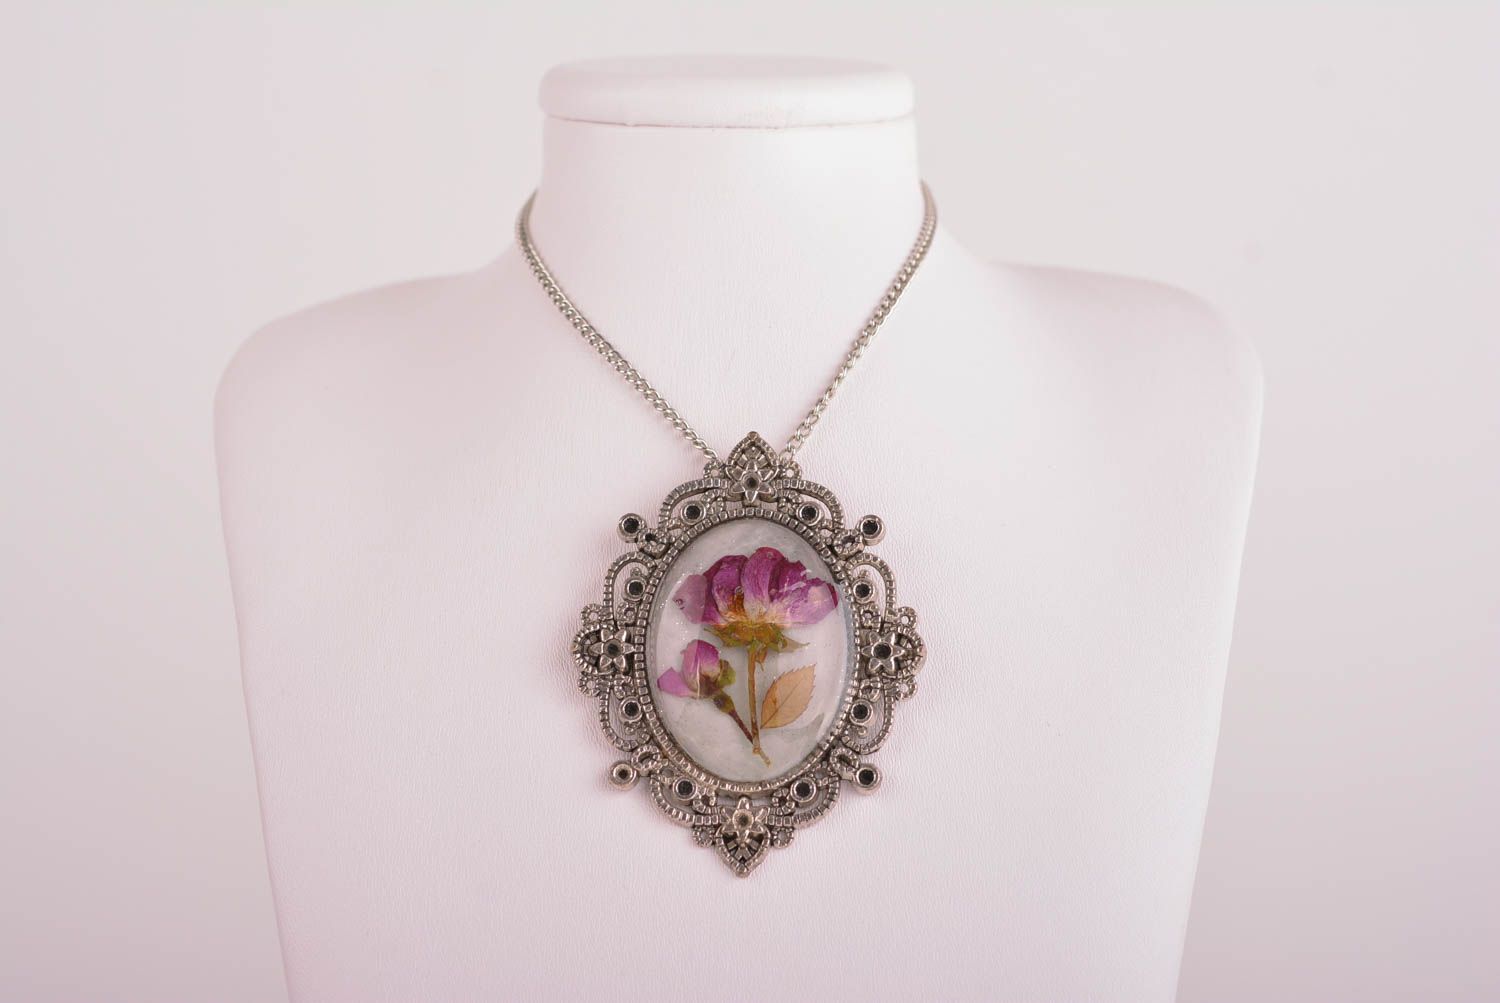 Handmade pendant unusual jewelry designer accessory gift ideas epoxy jewelry photo 3